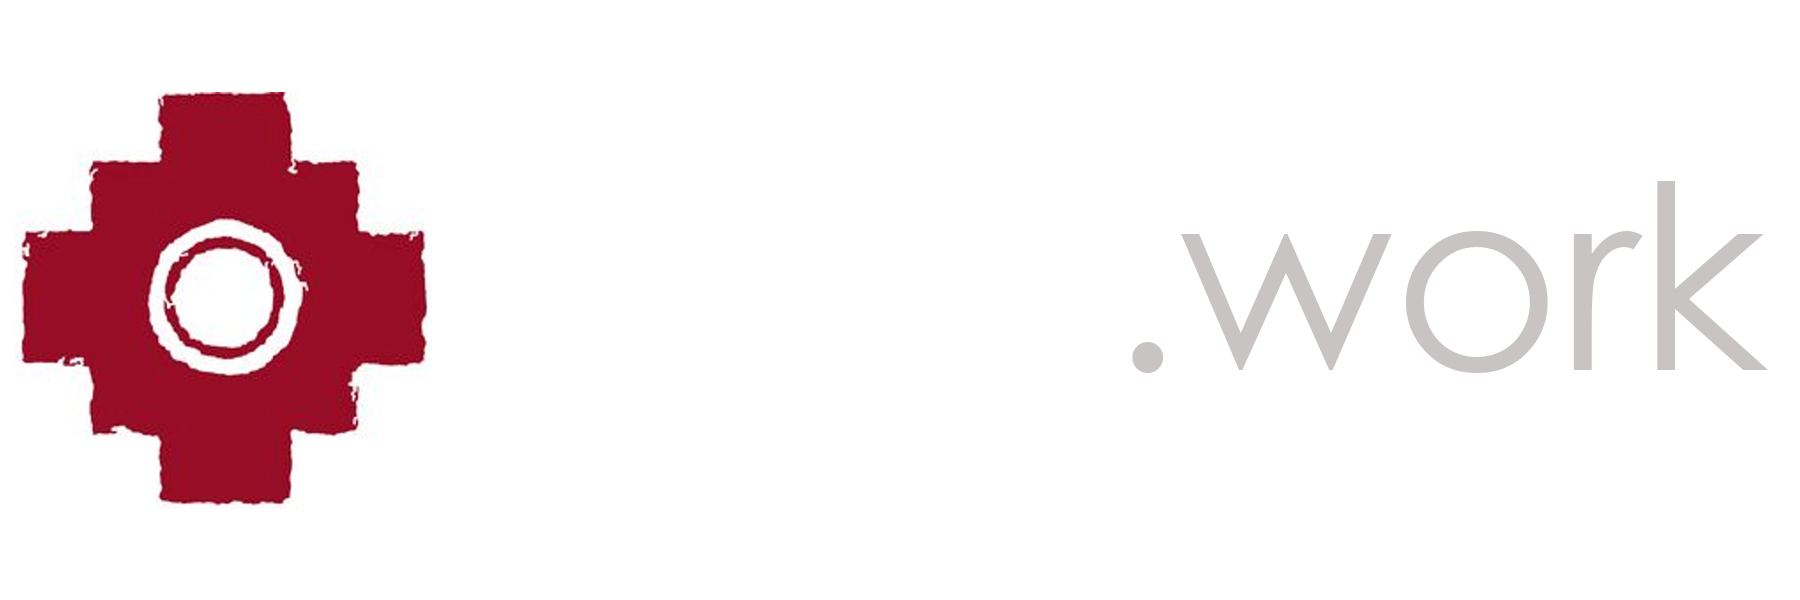 xolas.work logo